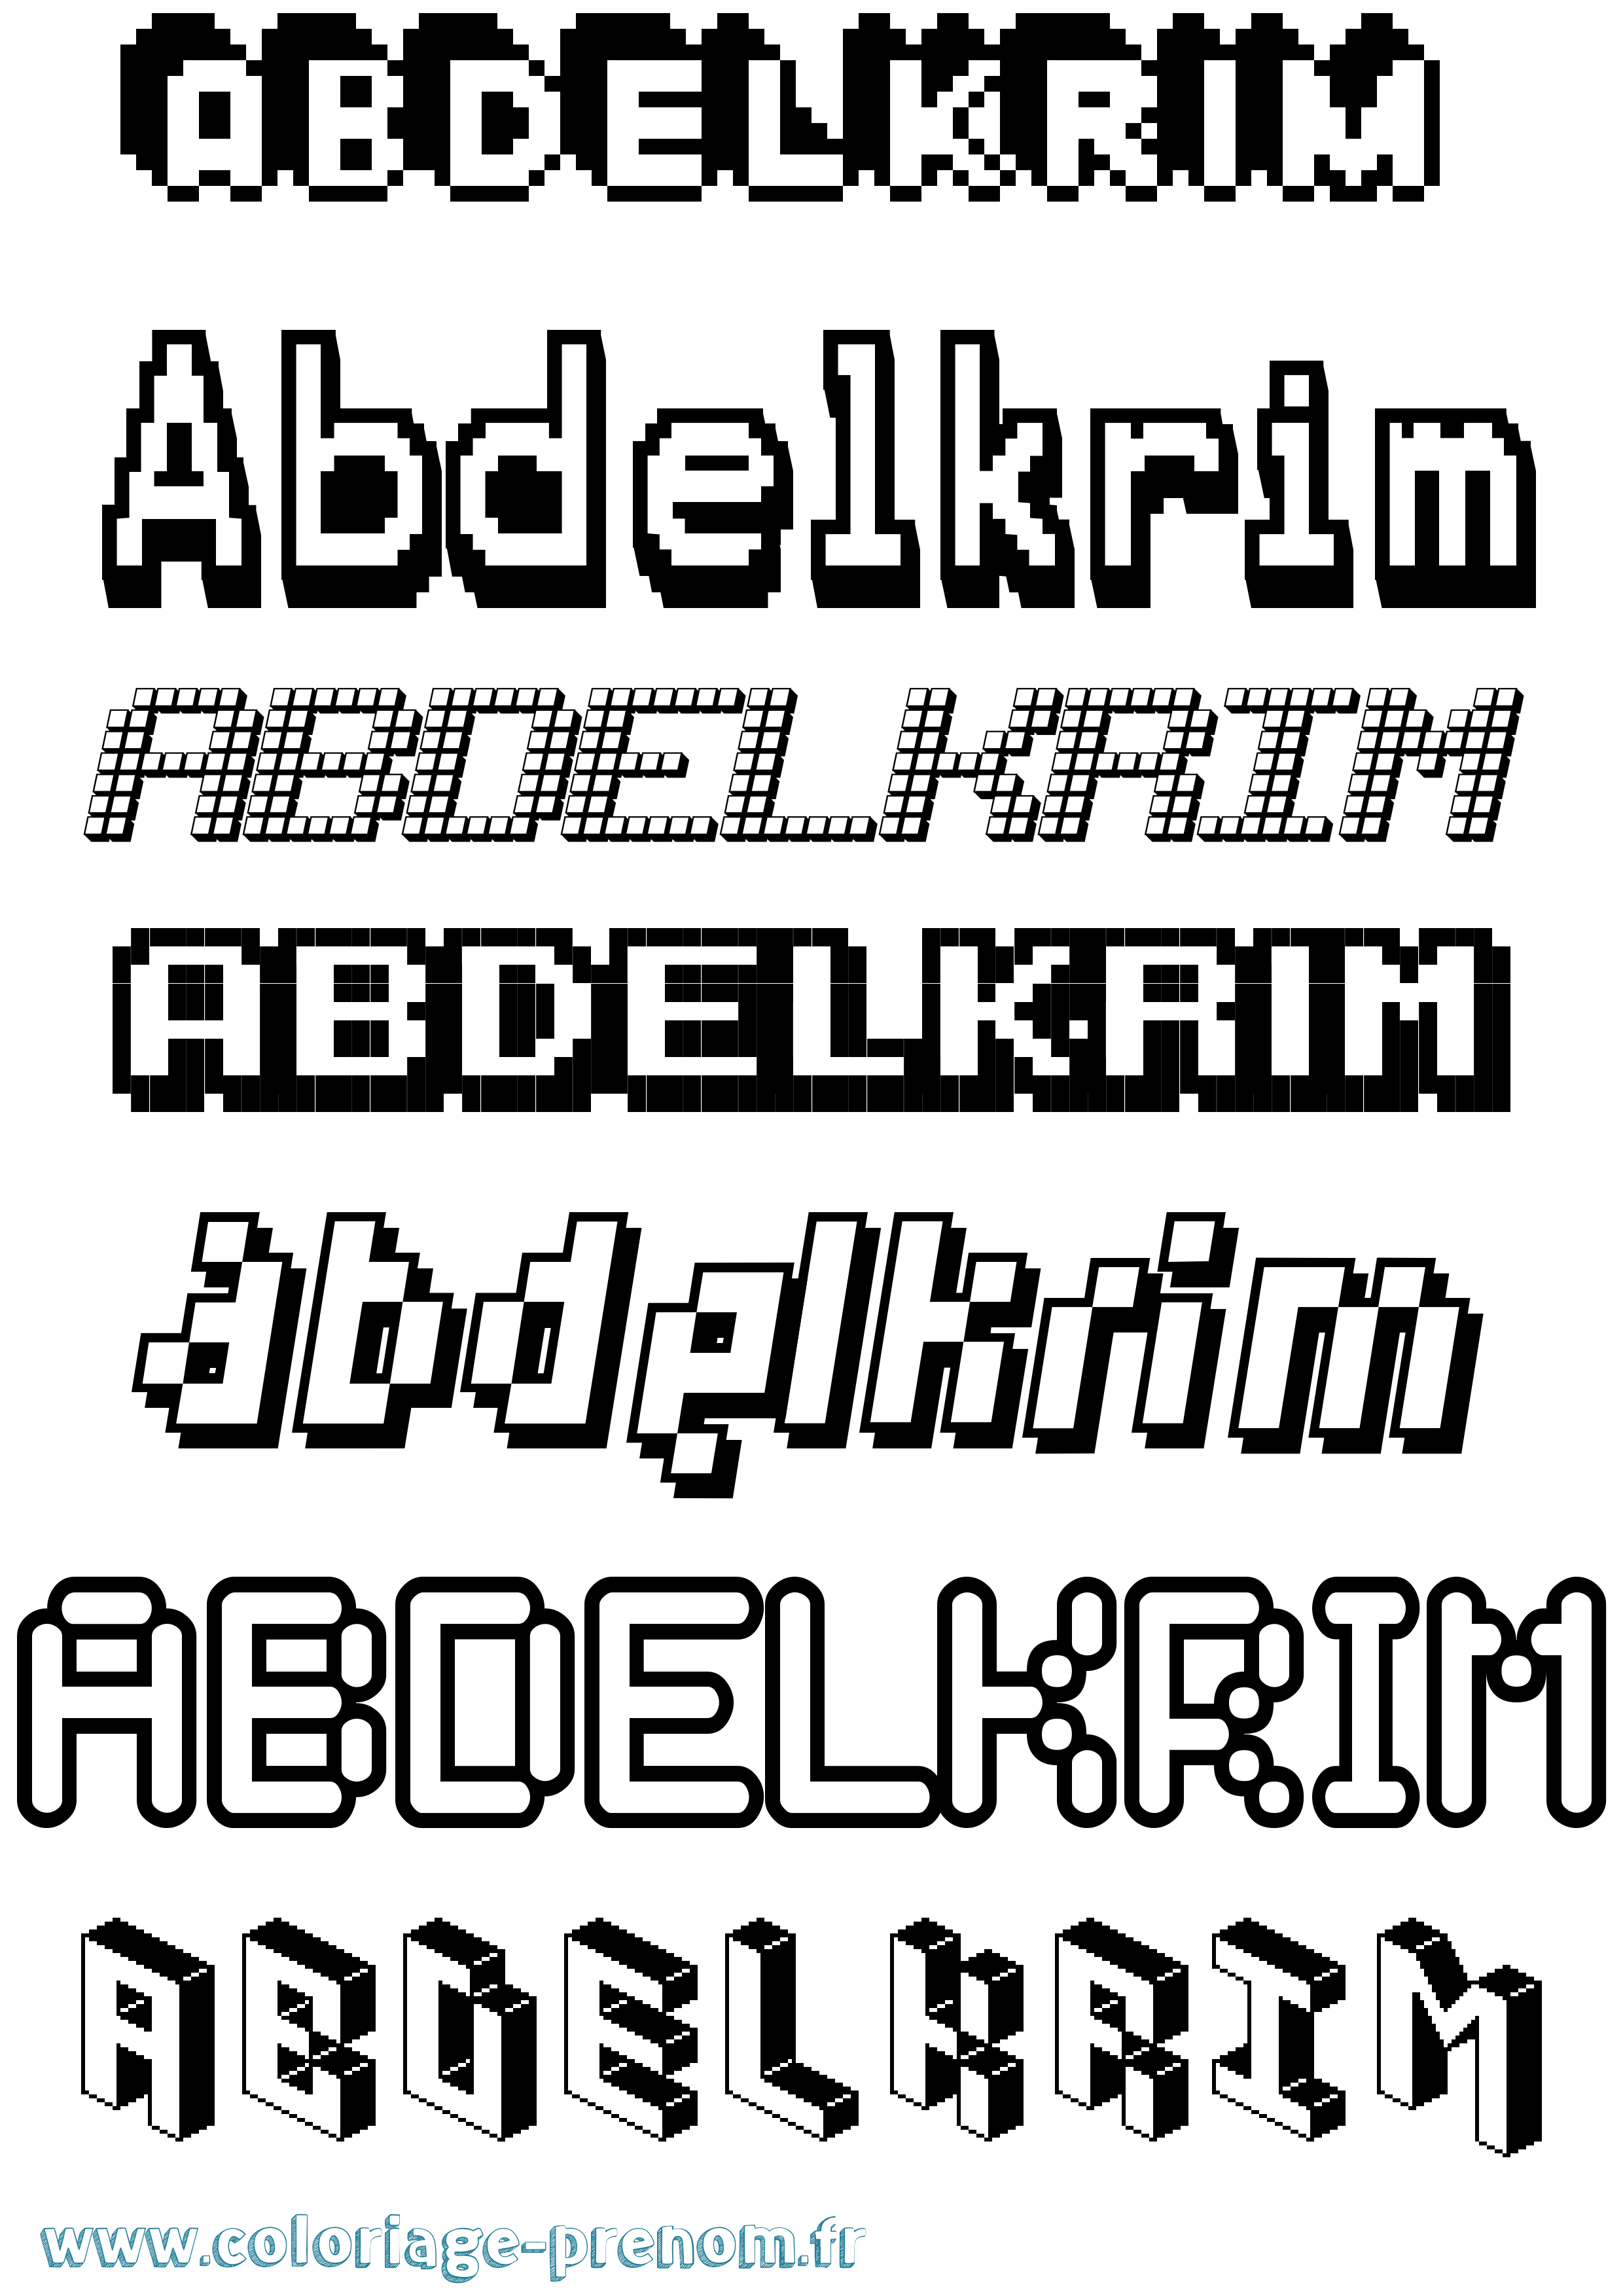 Coloriage prénom Abdelkrim Pixel